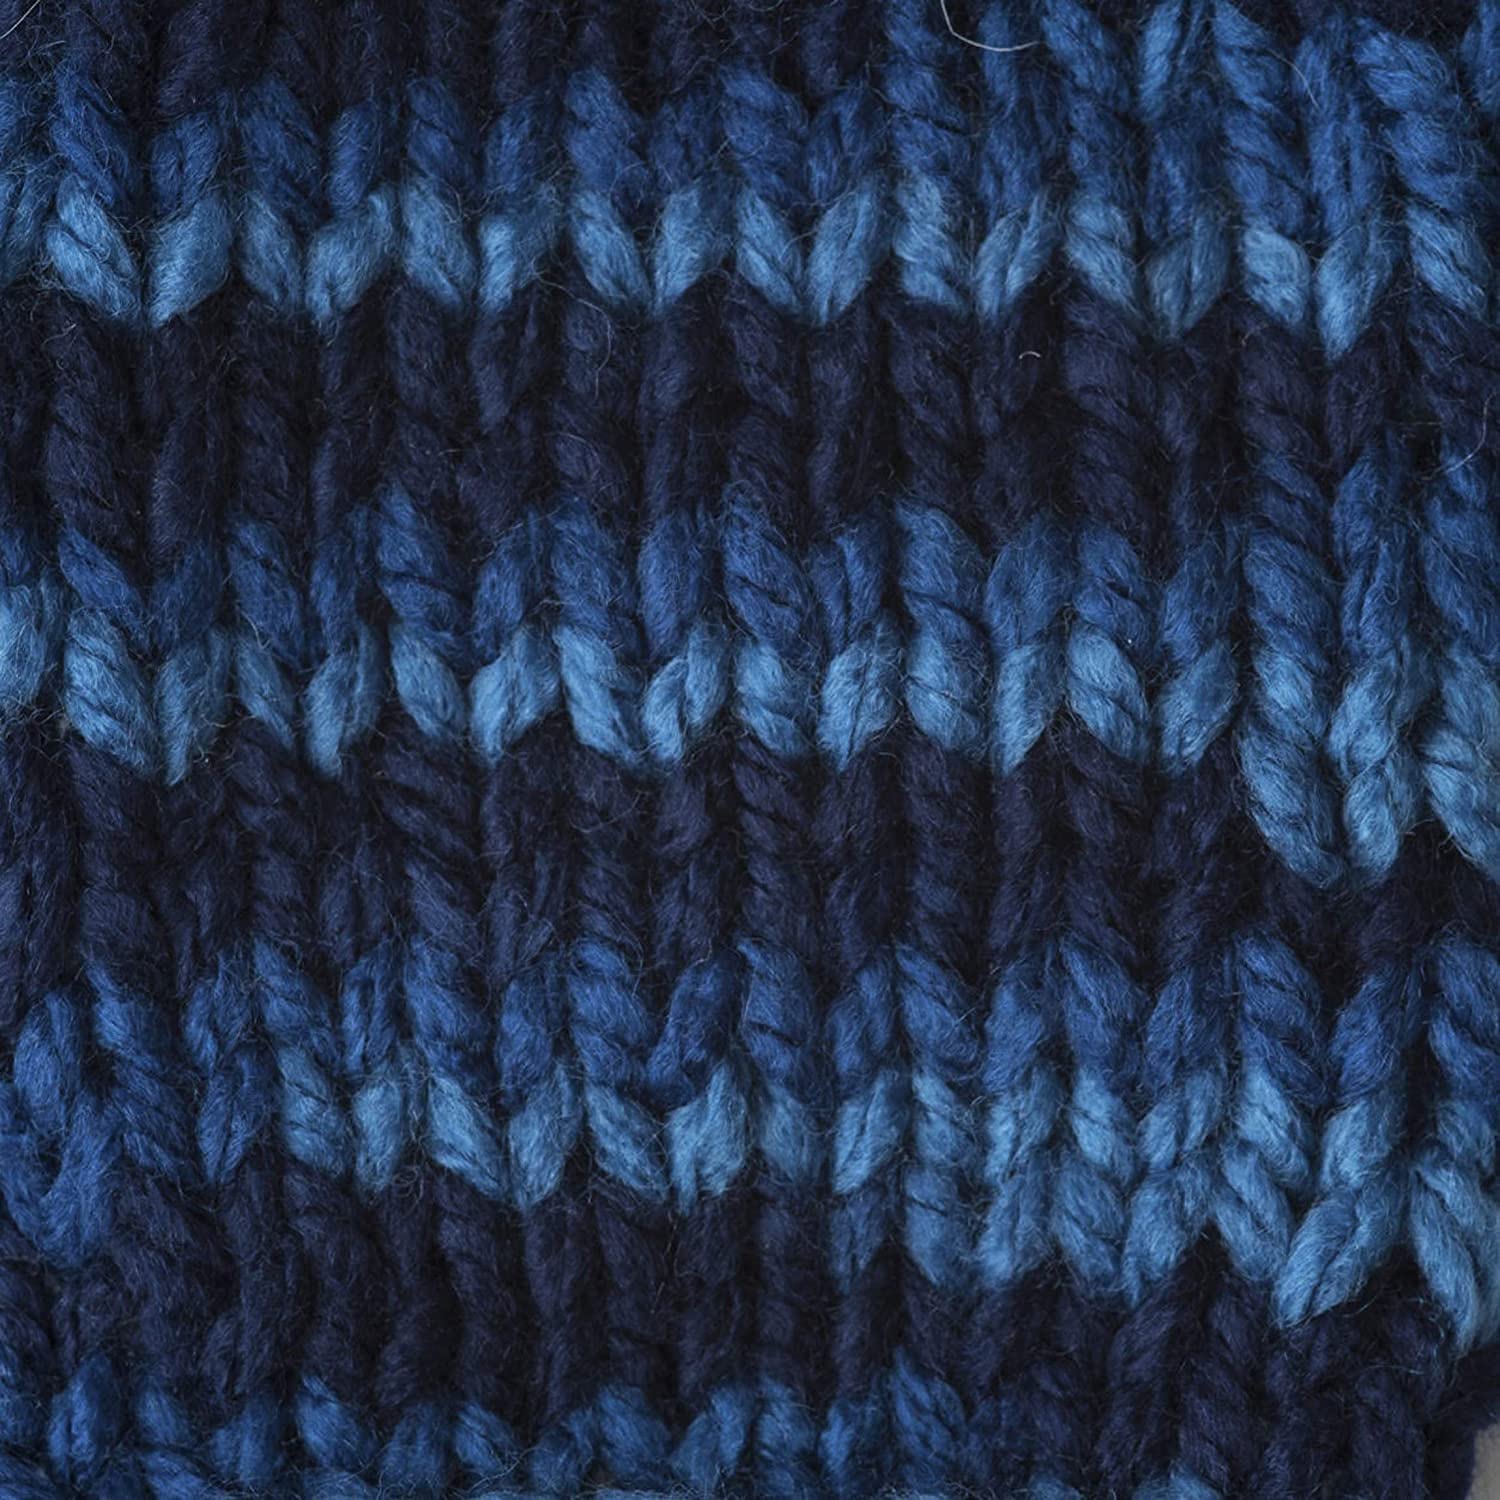 Bernat Softee Chunky Denim Ombre Yarn - 3 Pack of 80g/2.8oz - Acrylic - 6 Super Bulky - 77 Yards - Knitting/Crochet